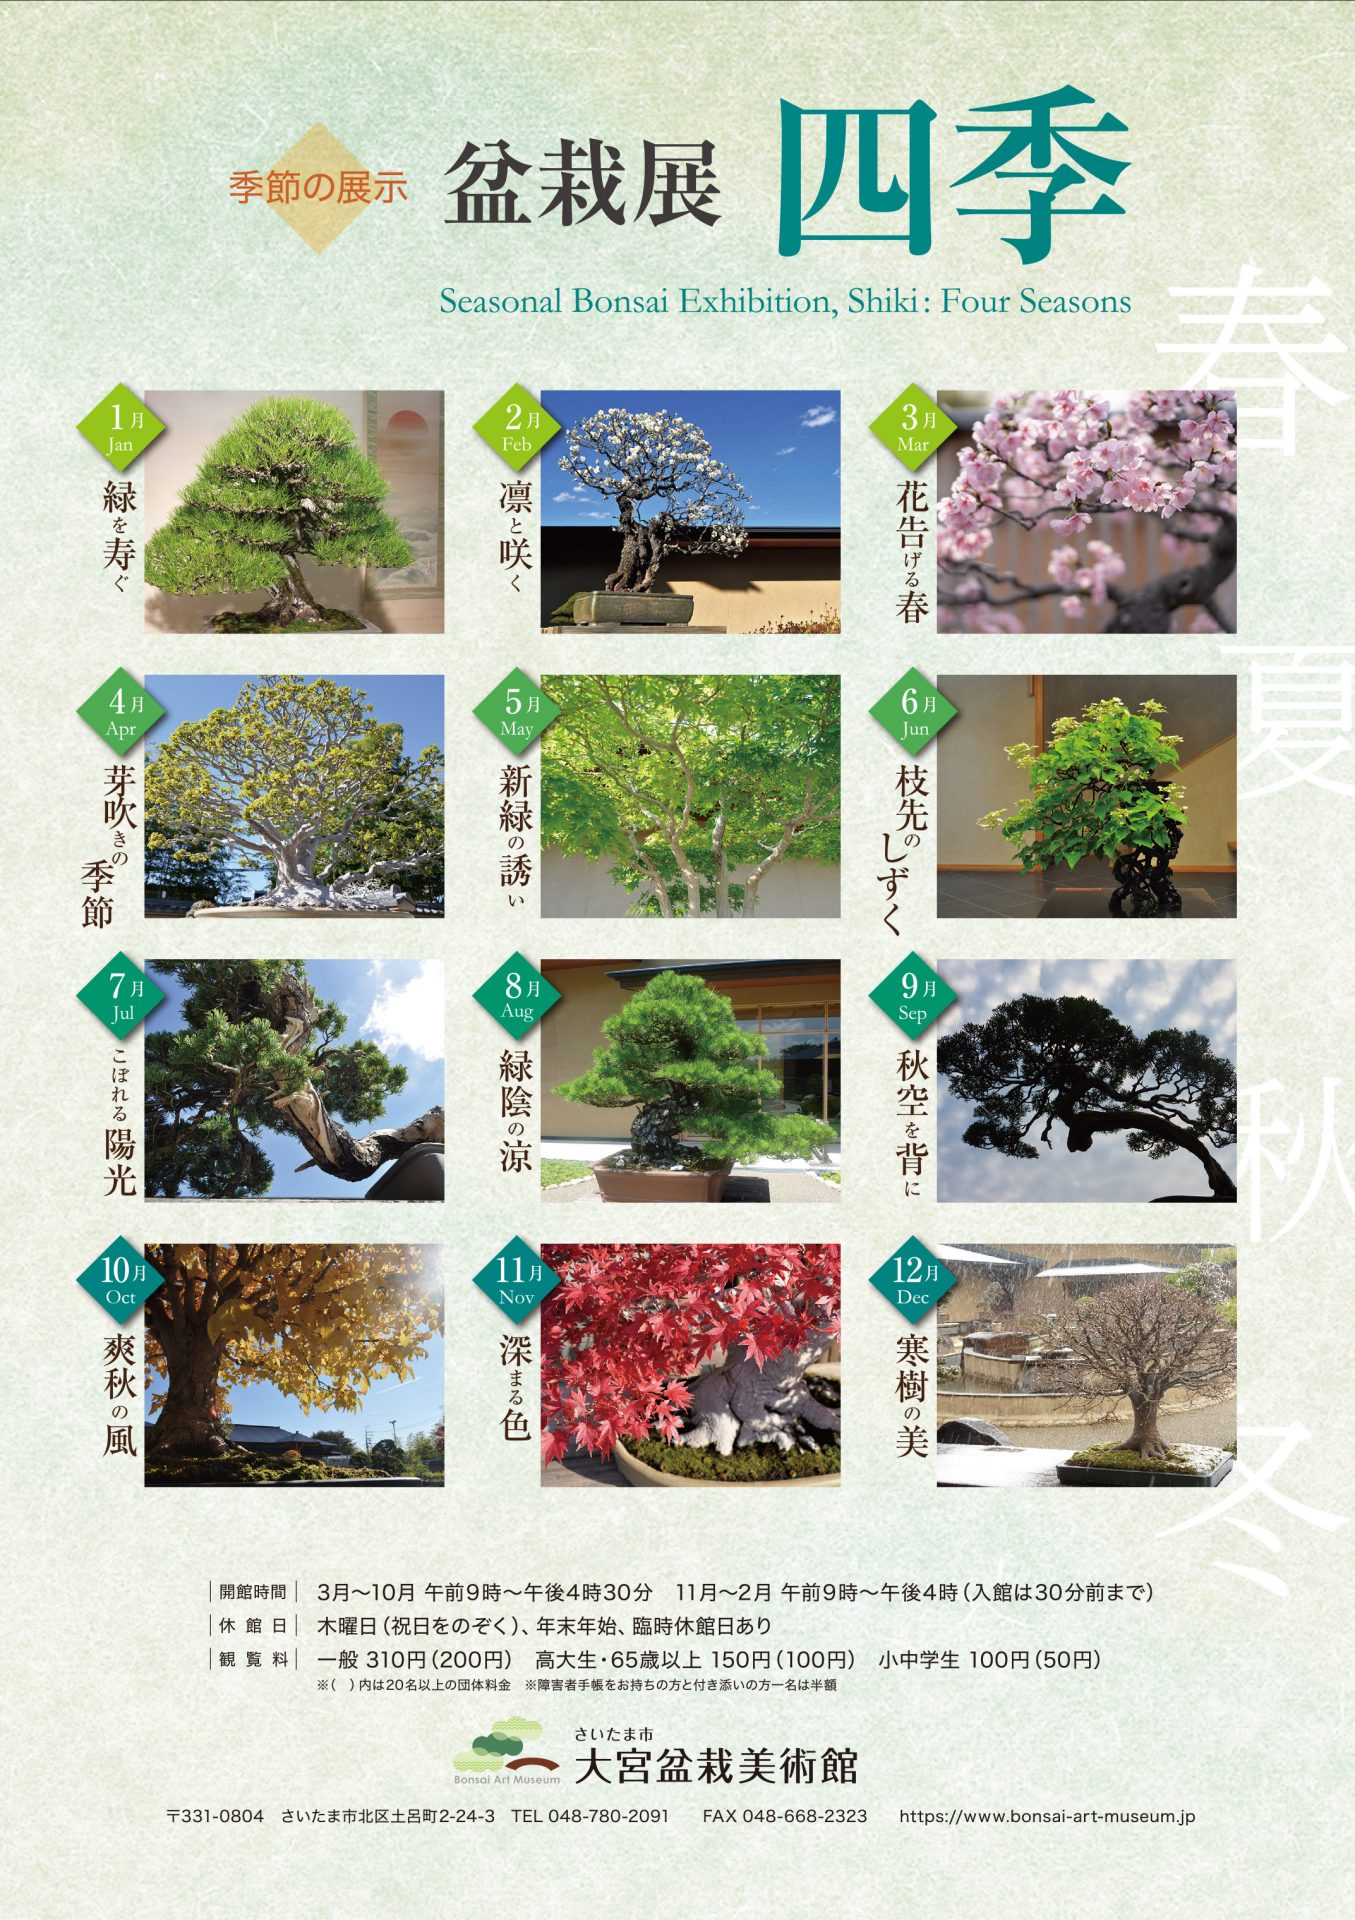 Seasonal Bonsai Exhibition, Shiki: Four Seasons, June, Drops on the Tips of Branches